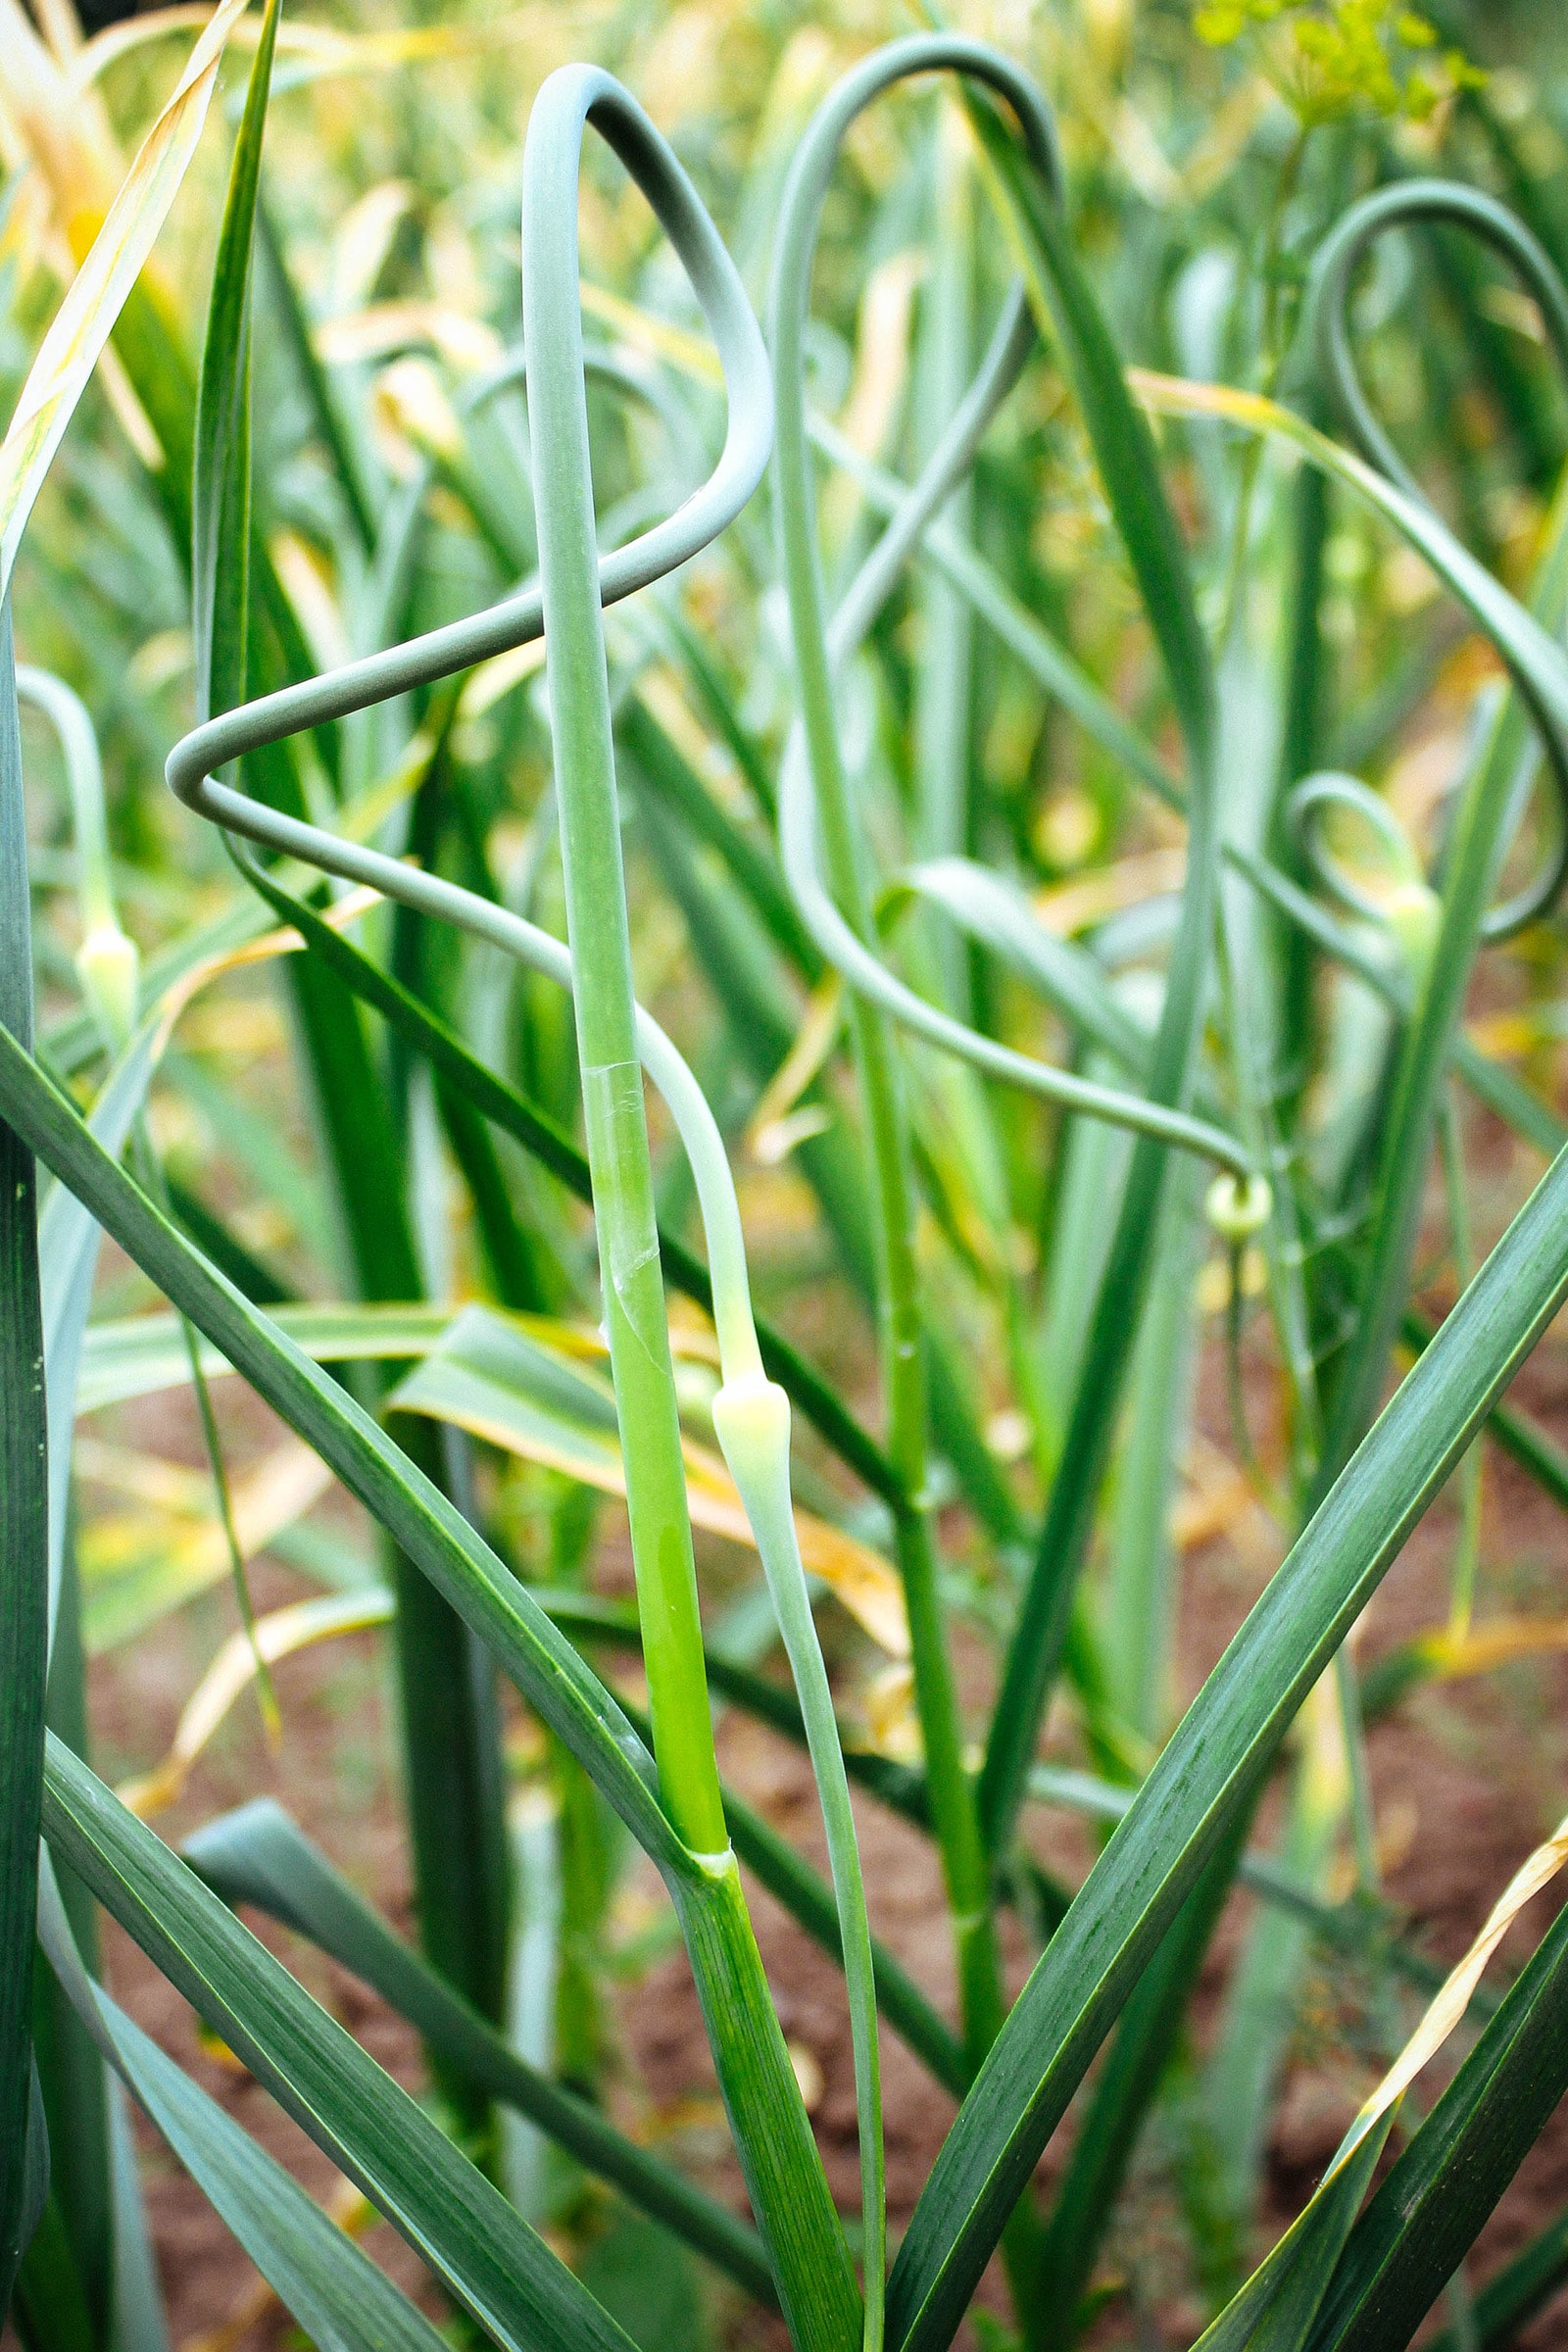 Twisty garlic scapes growing in a garden